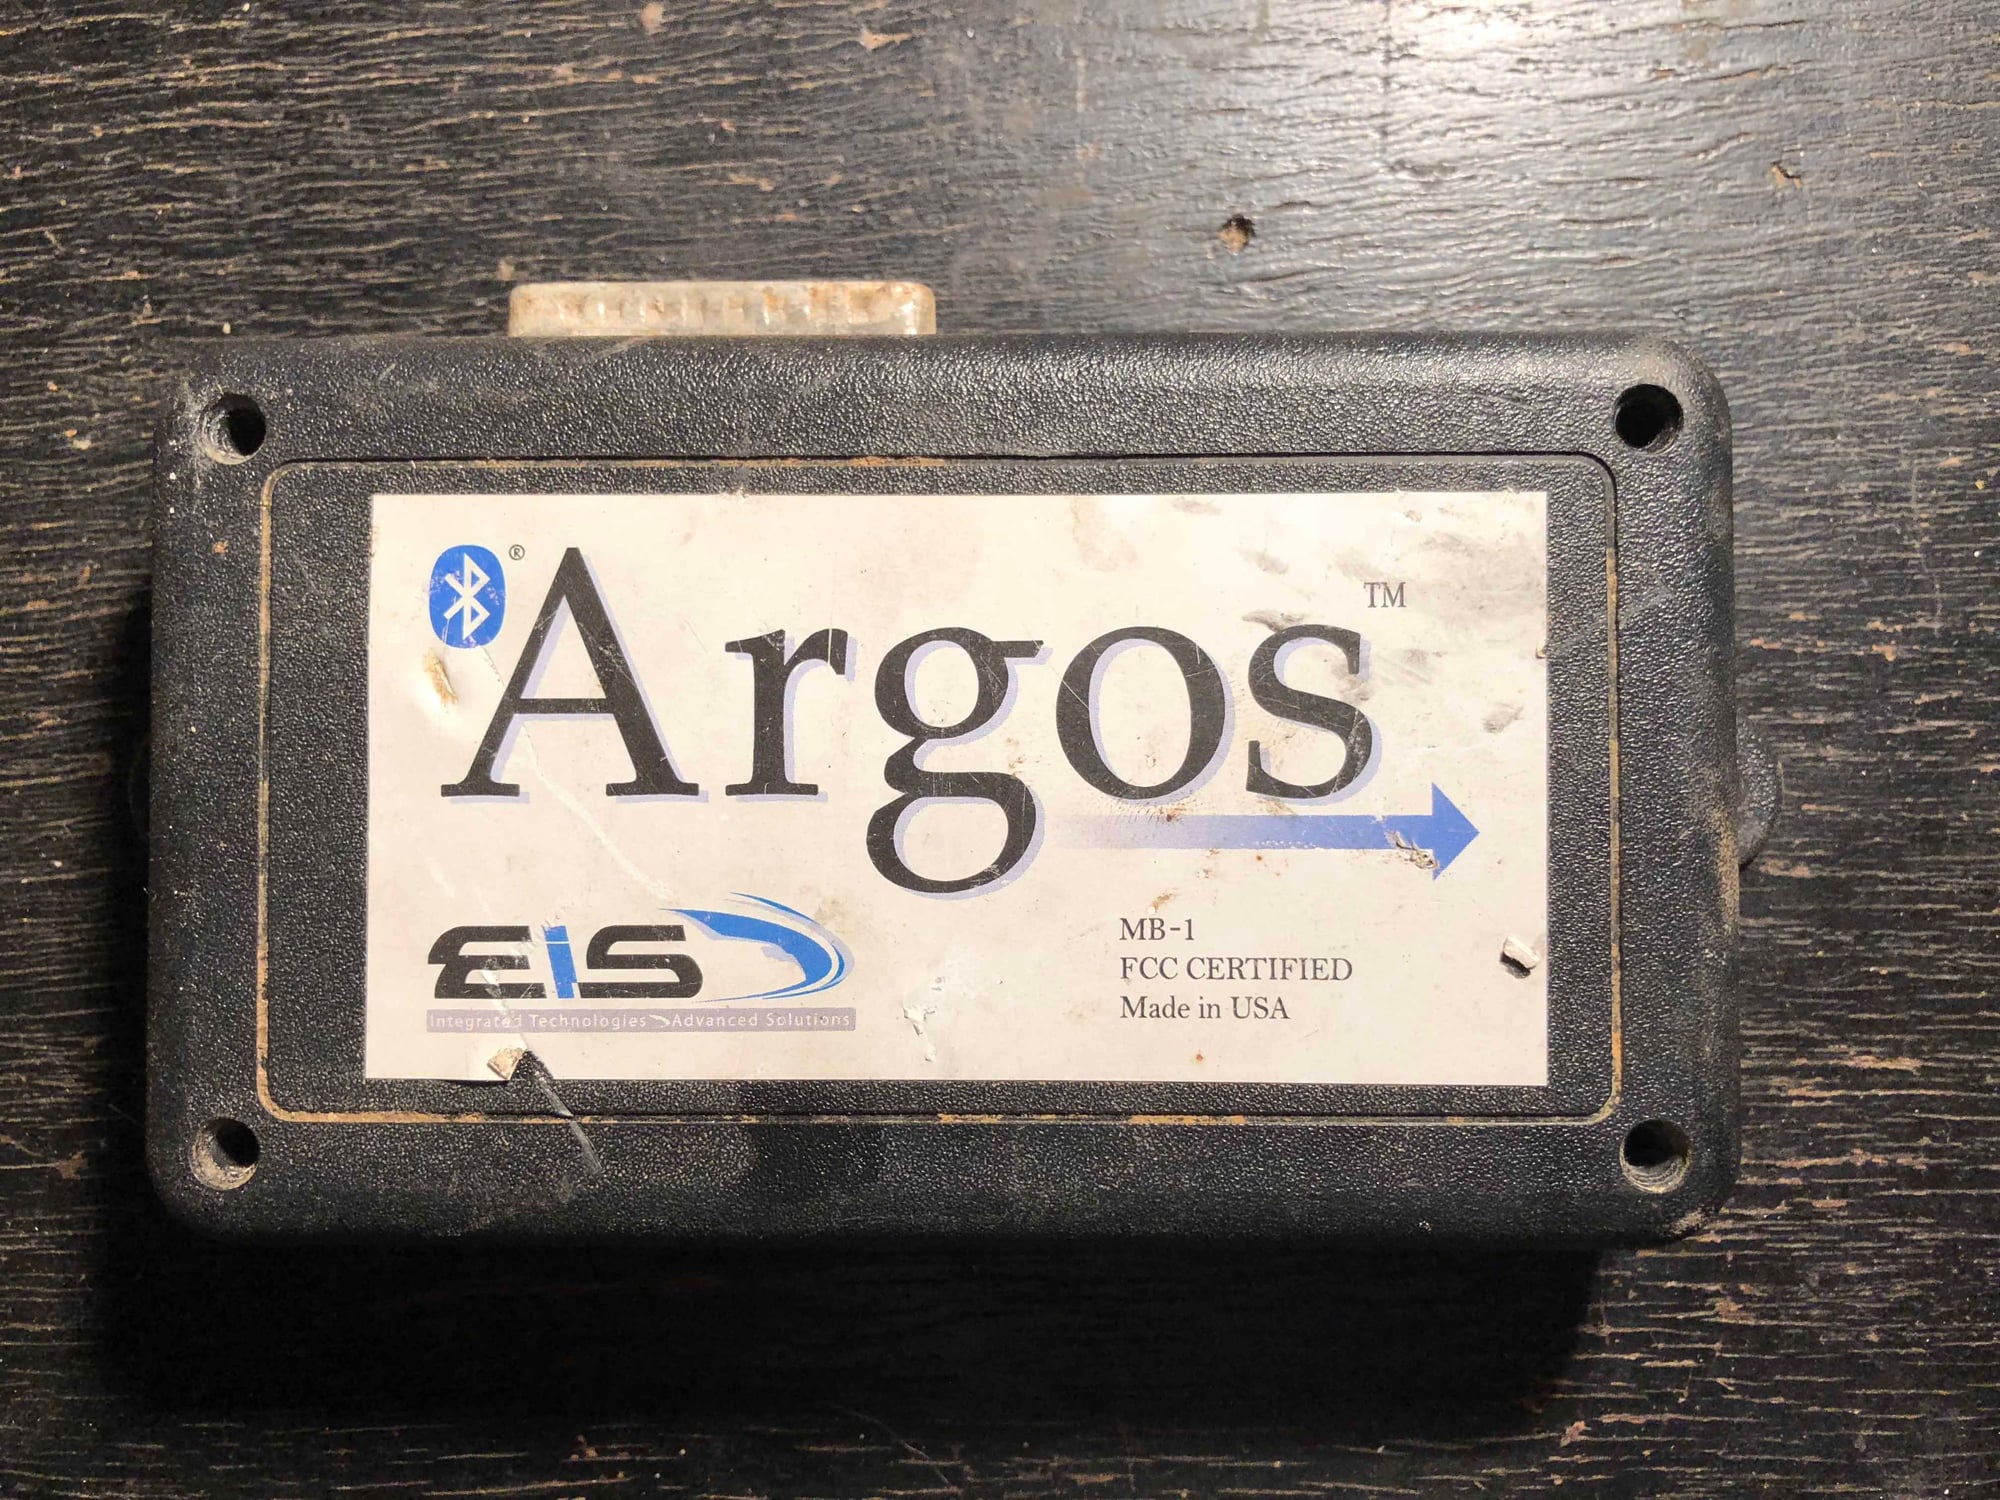 Audio Video/Electronics - Argos EIS Bluetooth phone module - Used - 2000 to 2004 Mercedes-Benz E320 - Topanga, CA 90290, United States